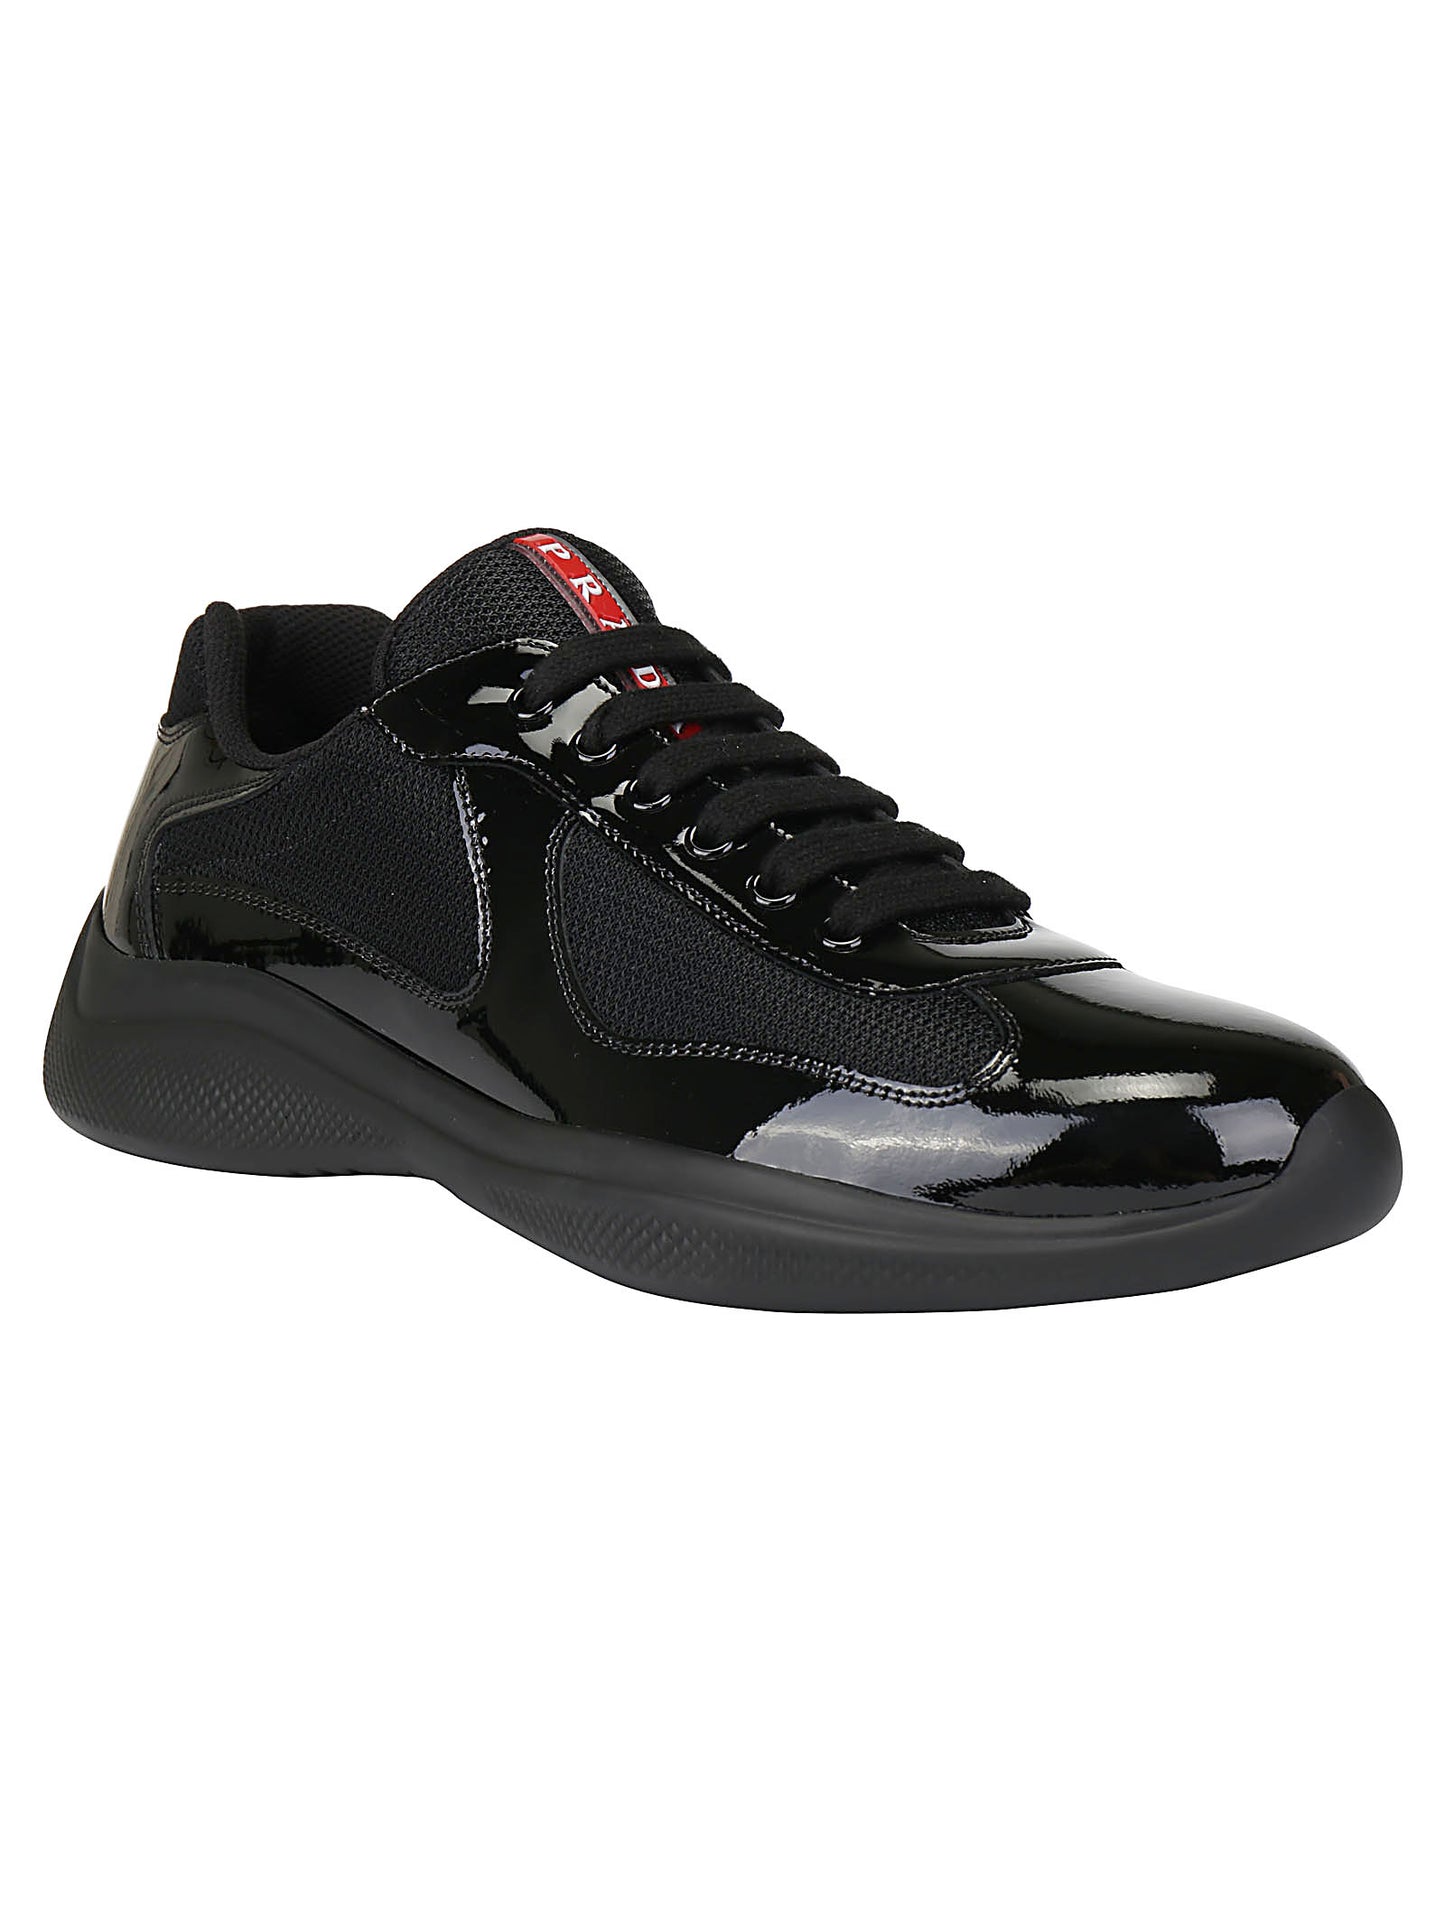 Prada America's Cup Sneakers - Black